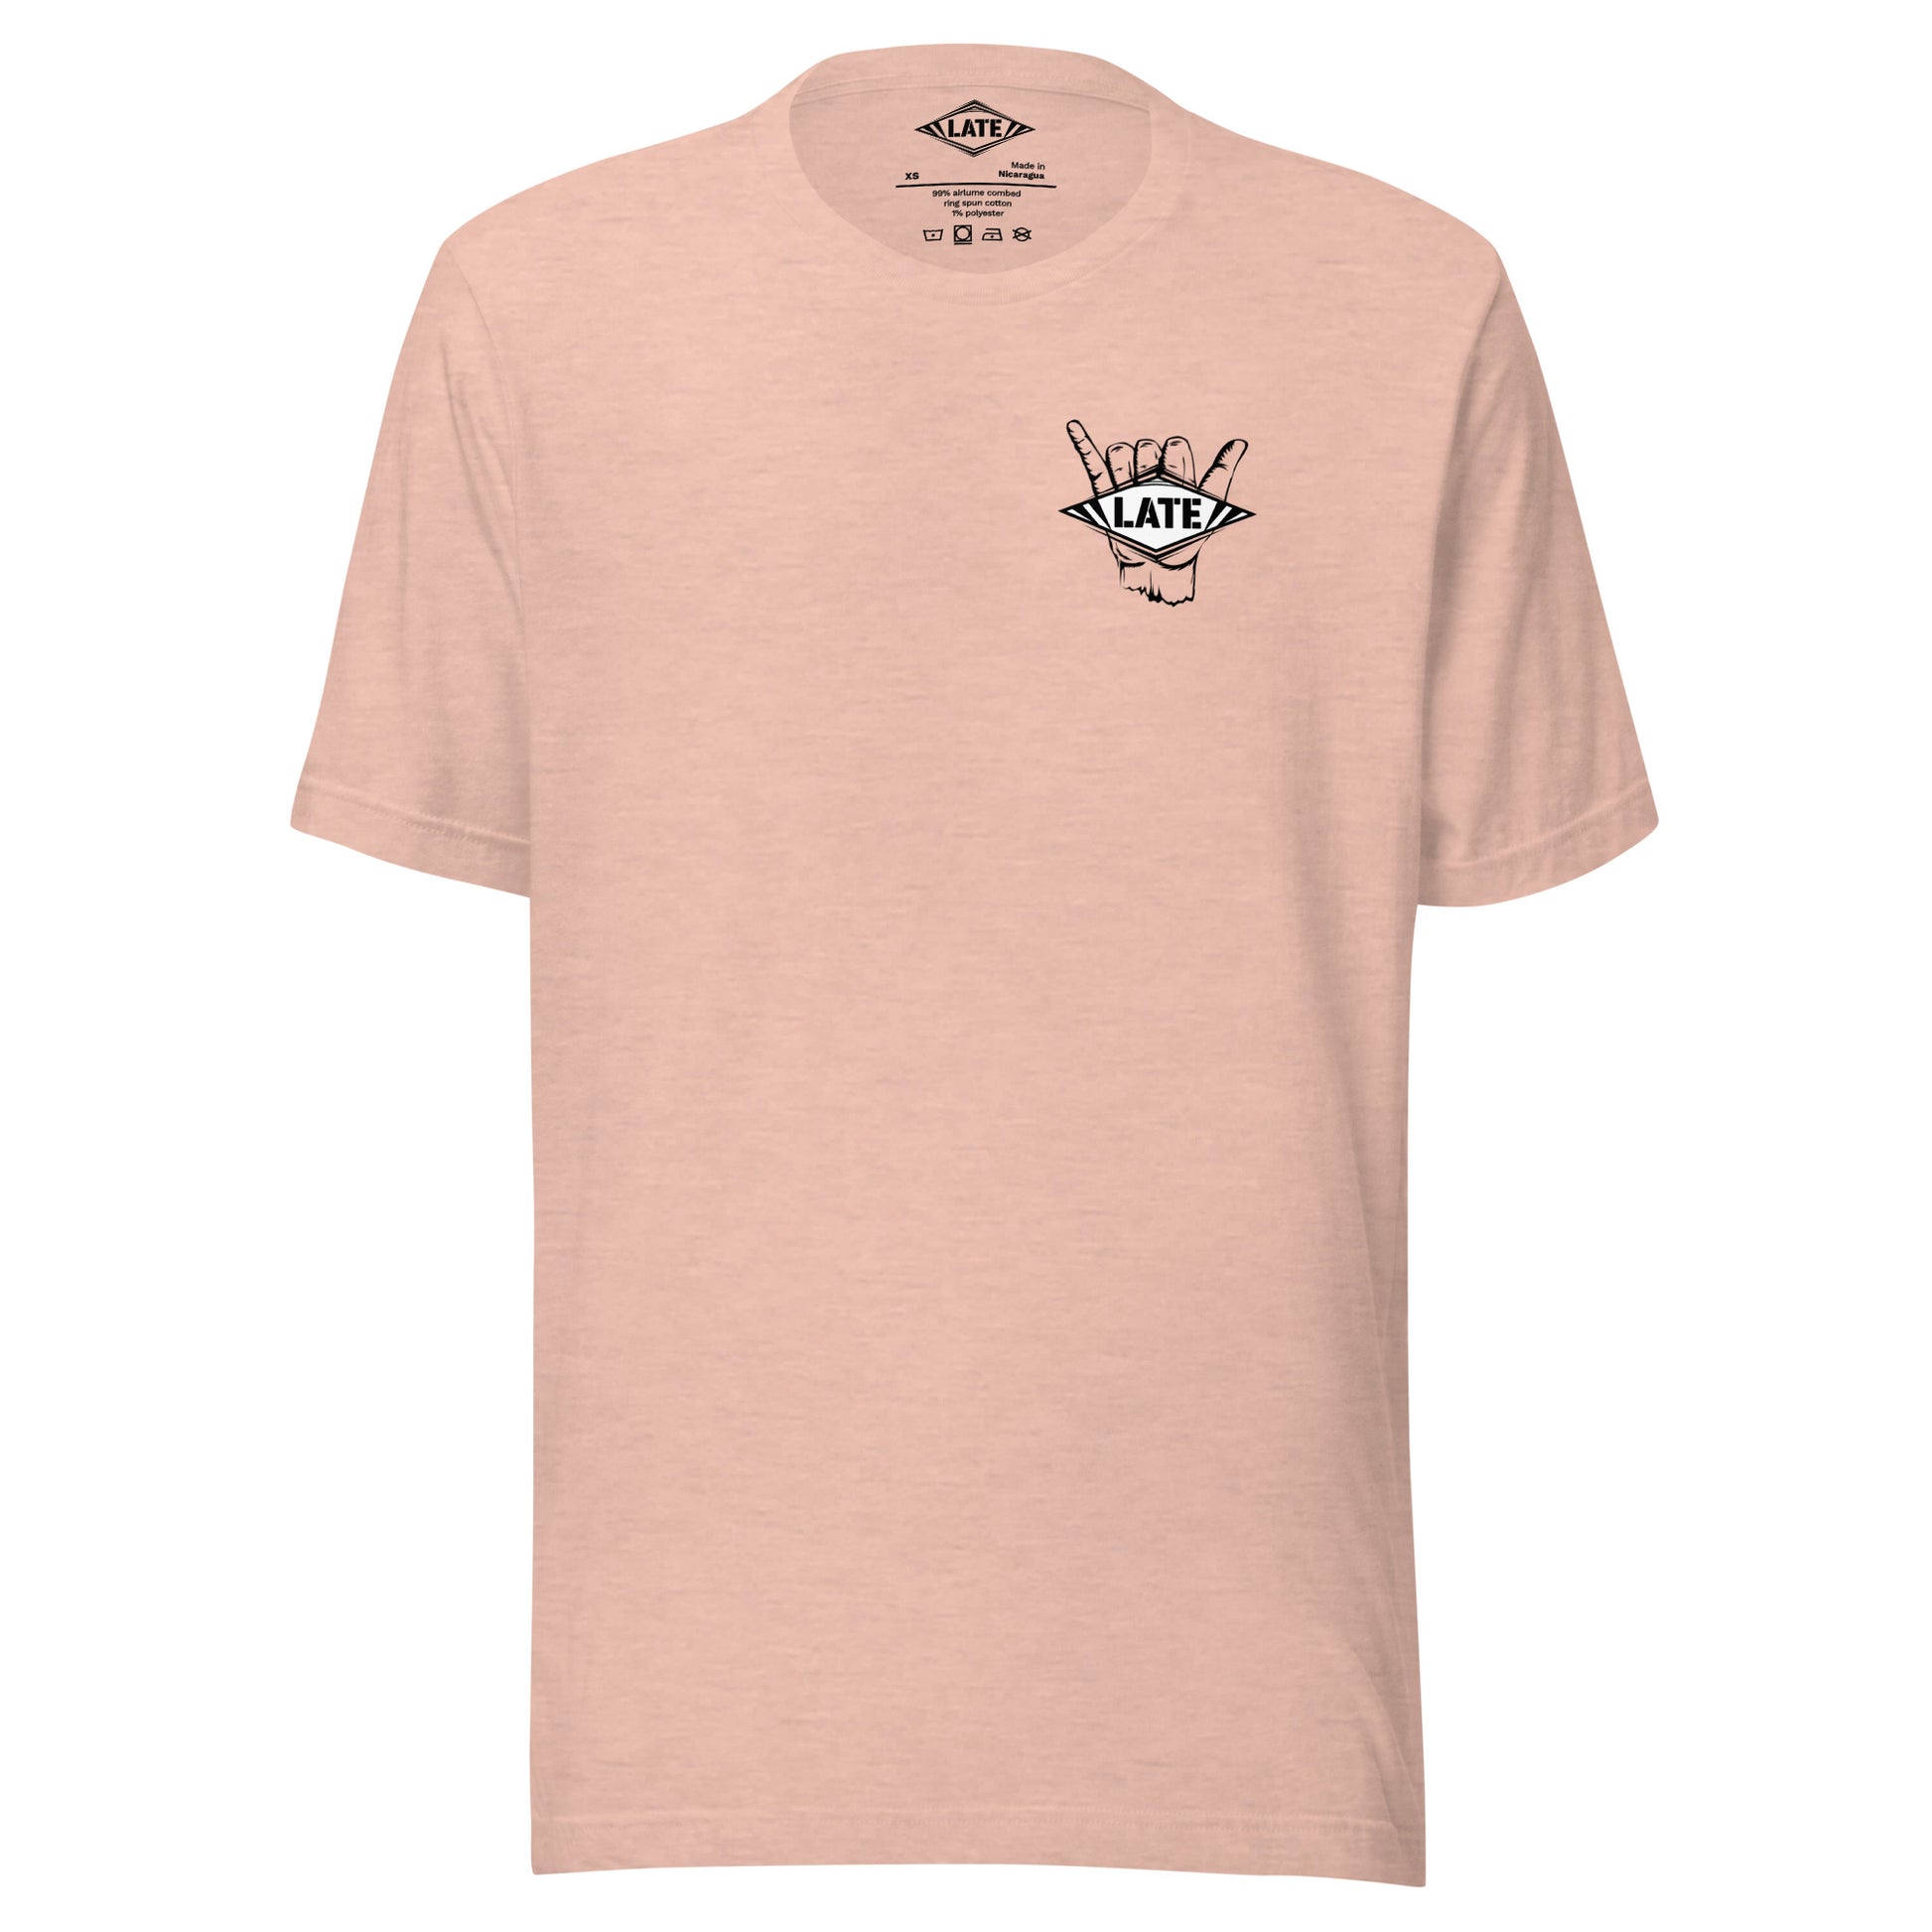 T-Shirt surfing main shaka avec le logo Late face avant t-shirt unisex couleur rose